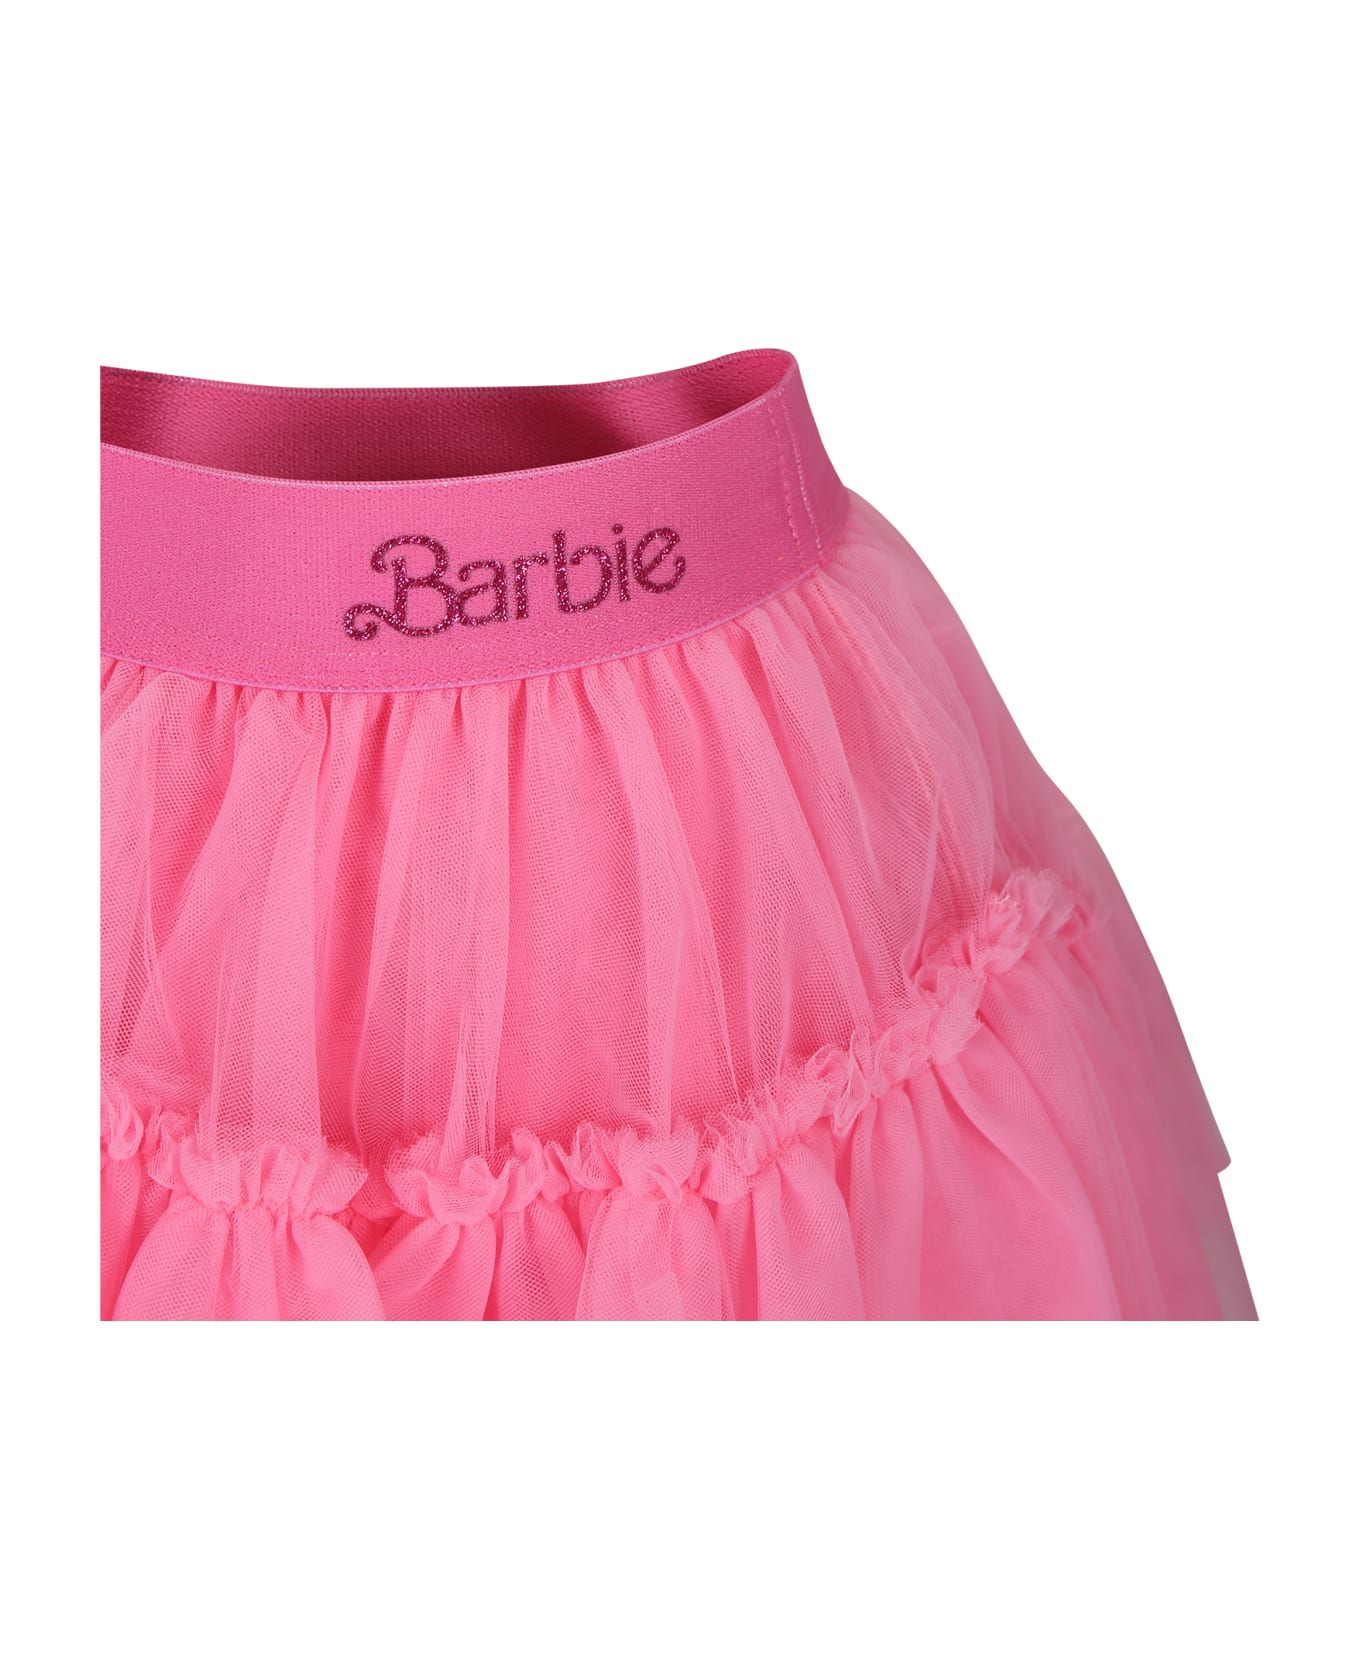 Monnalisa Pink Skirt For Girl With Writing - Pink